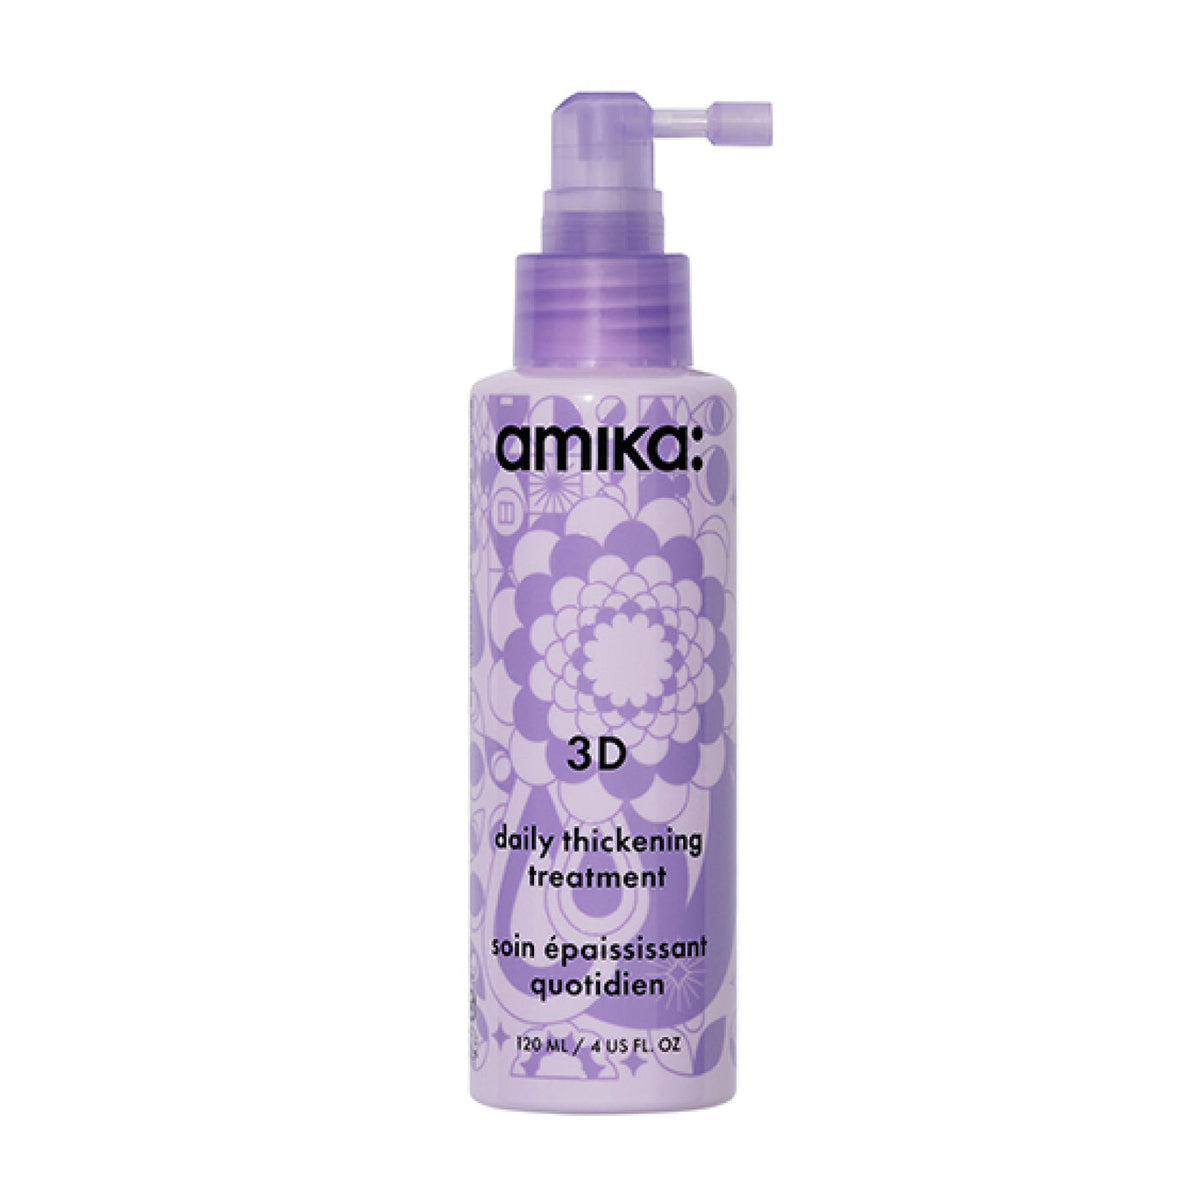 Amika 3D Daily Thickening Treatment 120ml